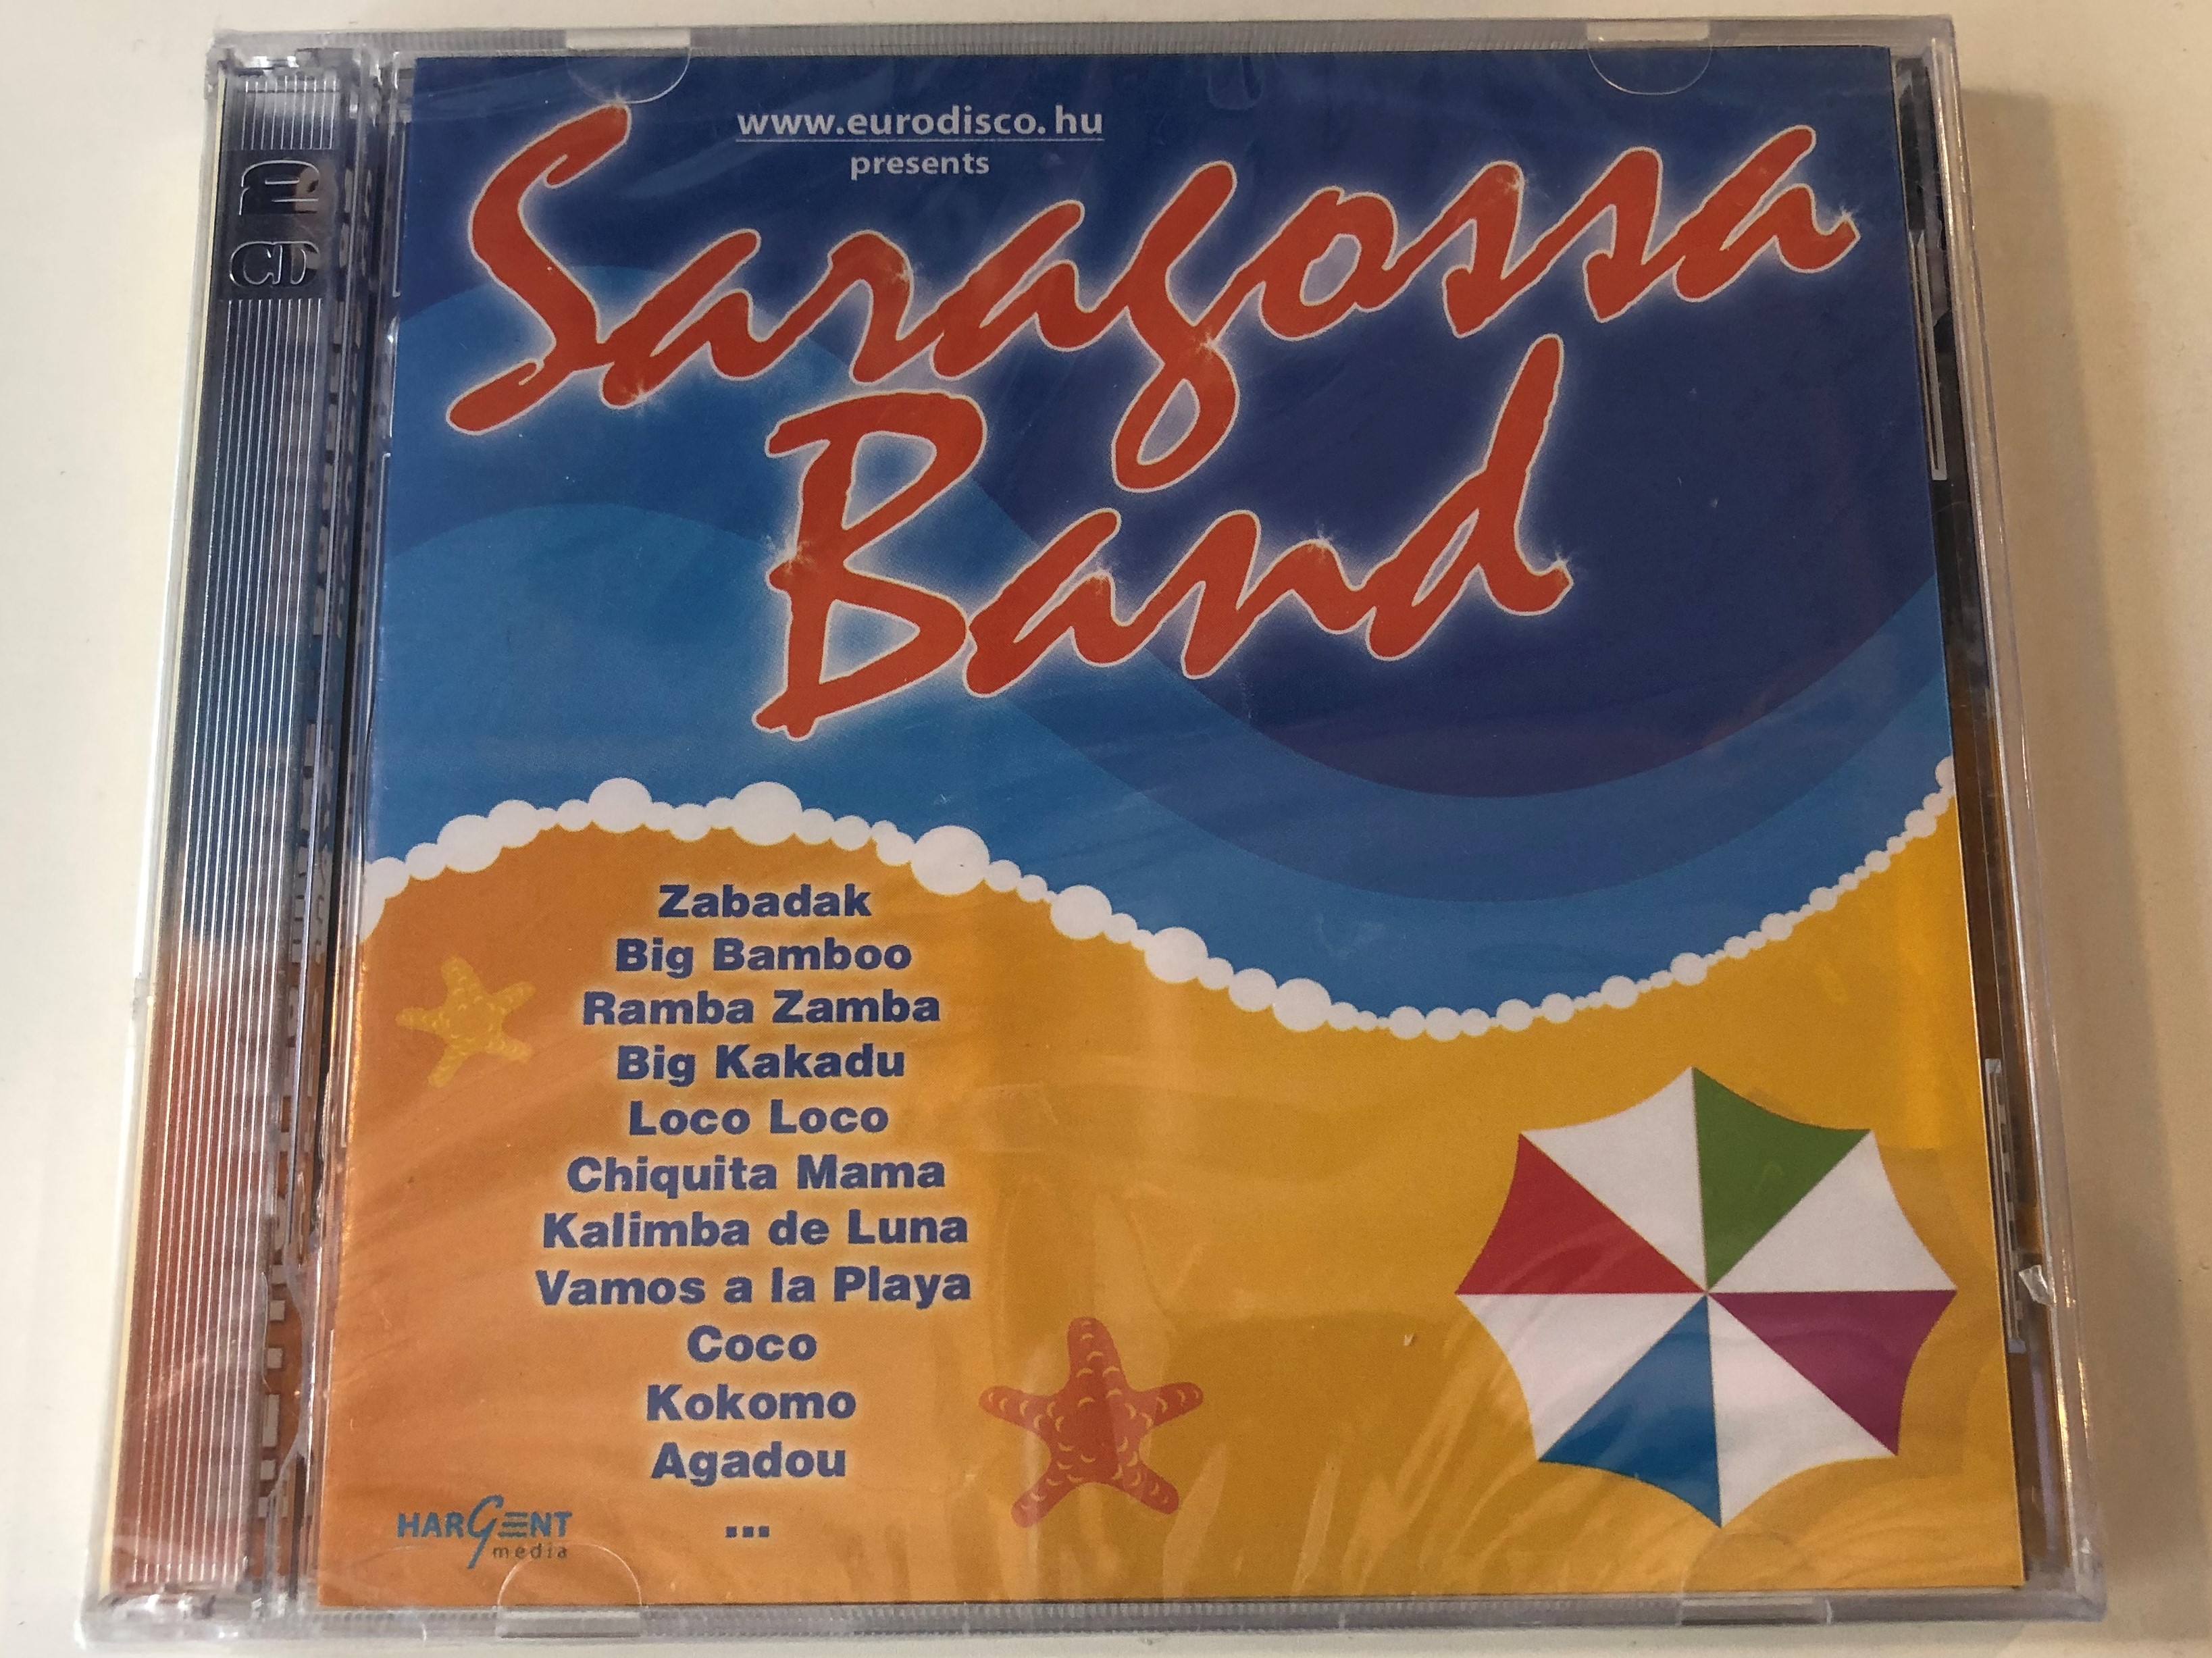 saragossa-band-zabadak-big-bamboo-ramba-zamba-big-kakadou-loco-loco-chiquita-mama-kalimba-de-luna-vamos-a-la-playa-coco-kokomo-agadou-...-hargent-media-2x-audio-cd-hg-713-1-.jpg